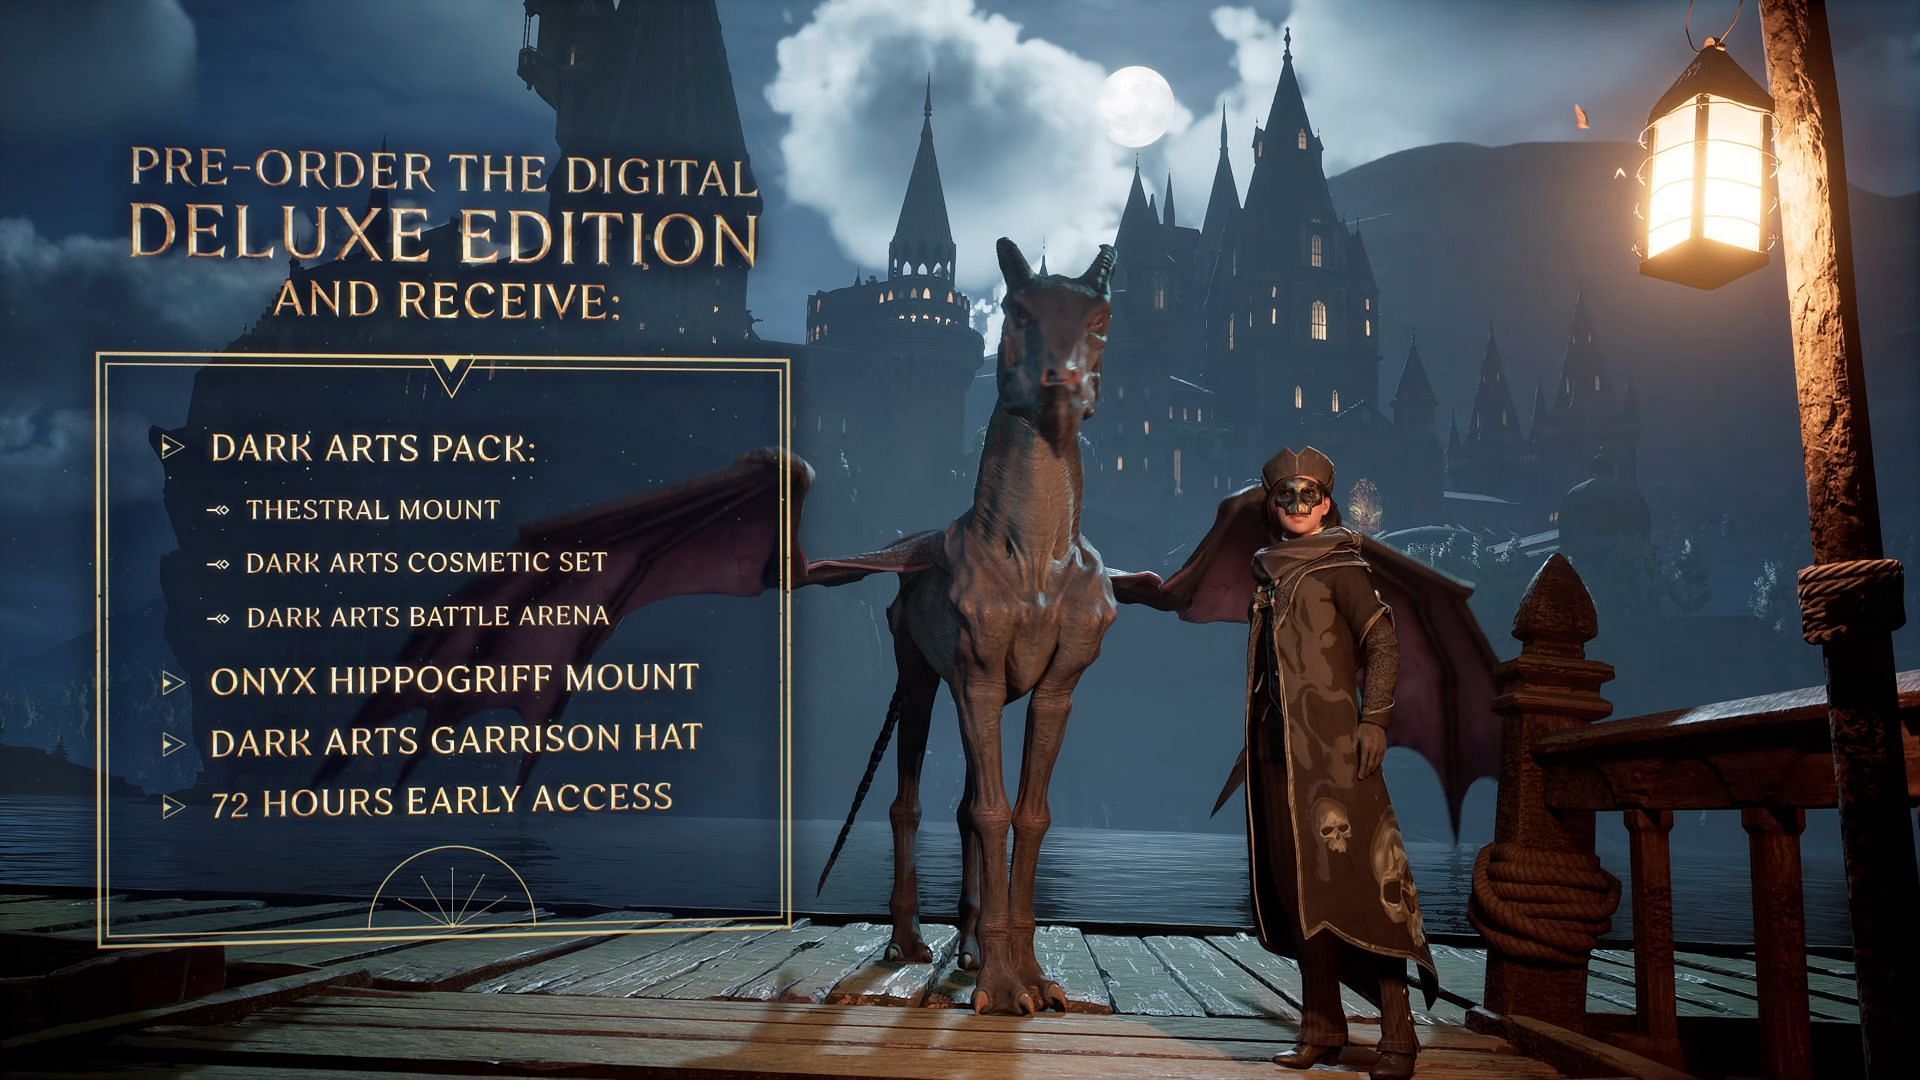 hogwarts legacy dark arts battle arena rewards